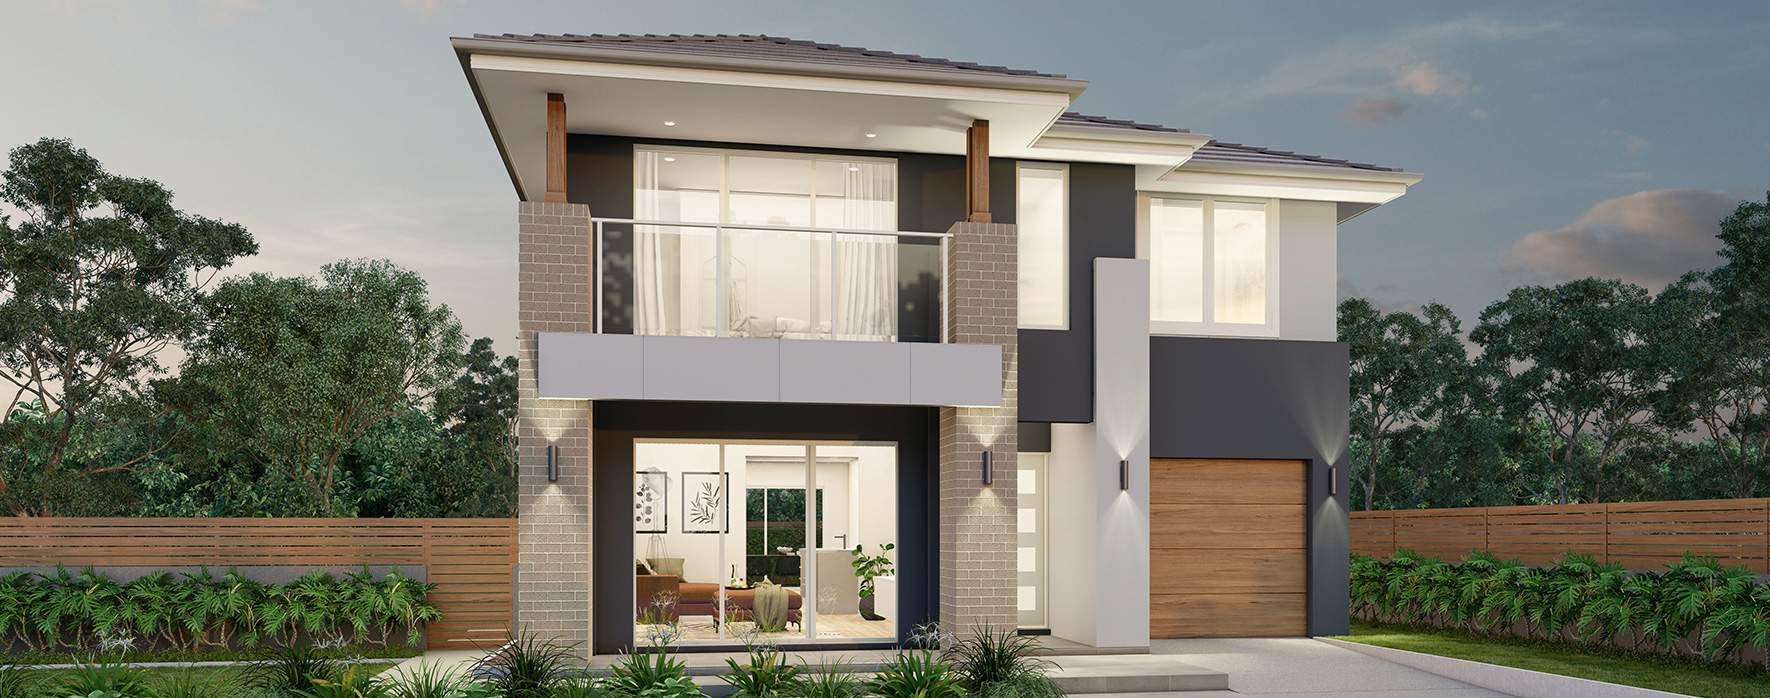 double-storey-standard-house-design-grande